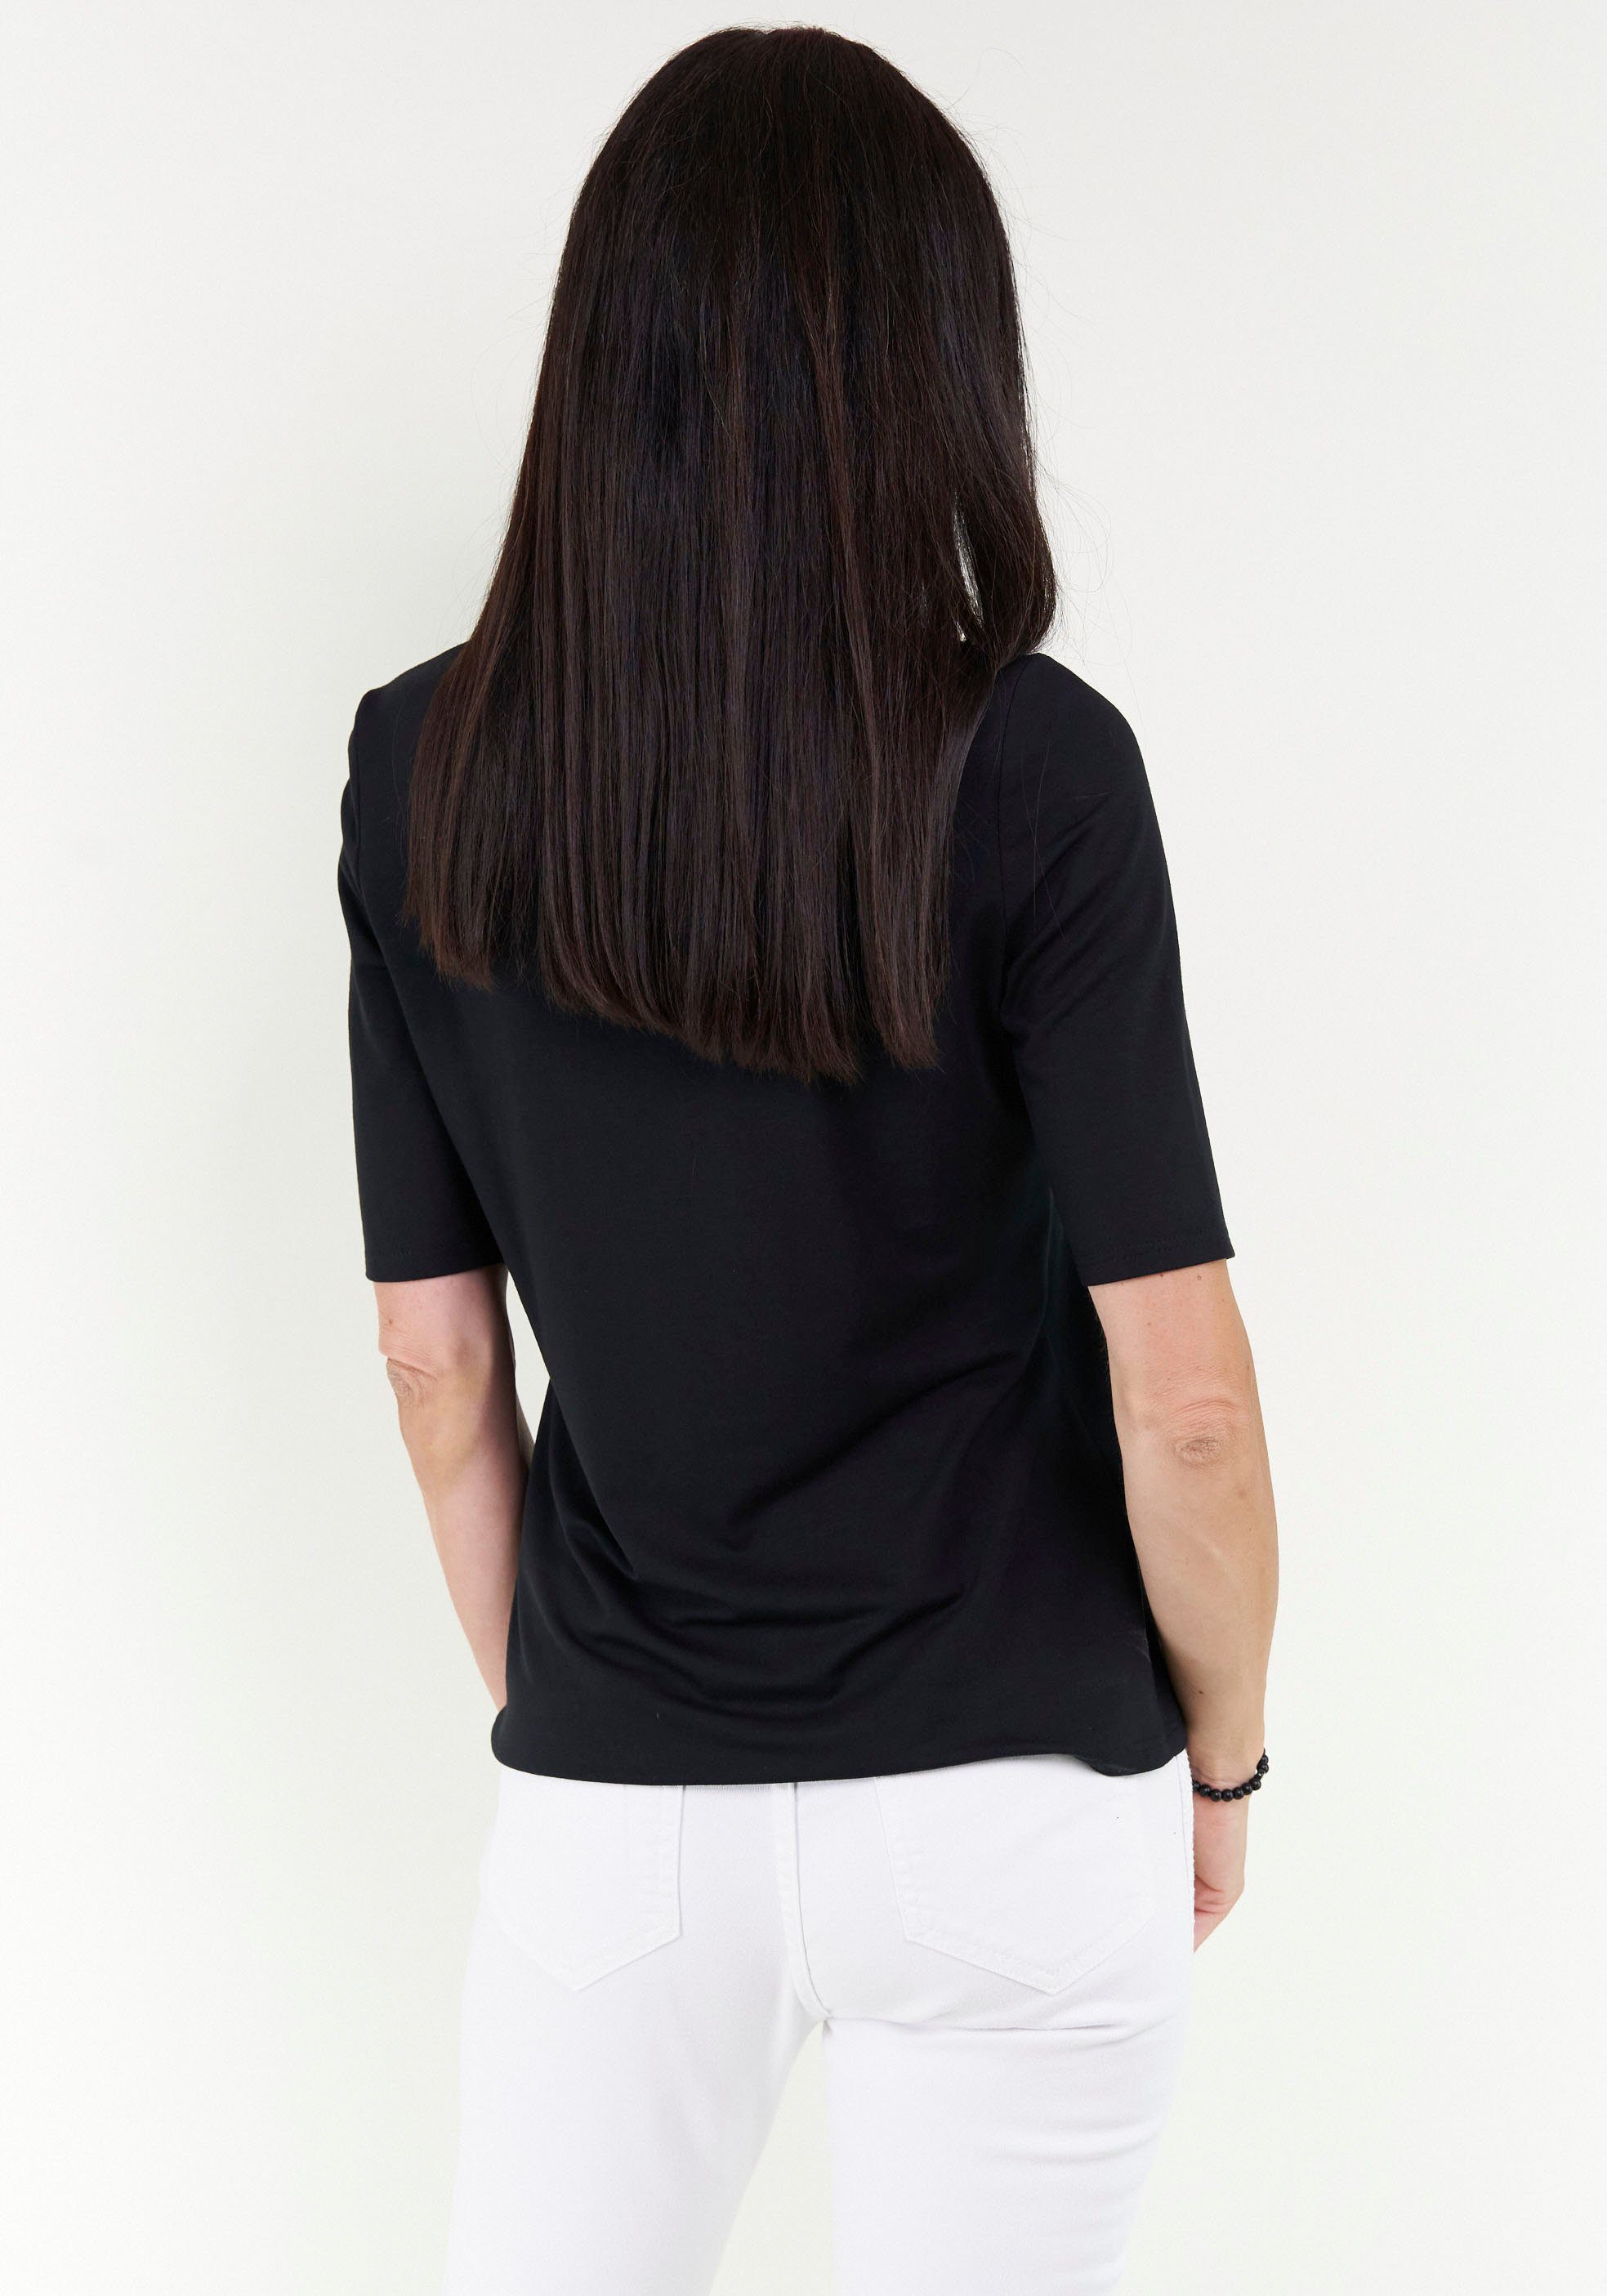 IN aus Halbarm MADE GERMANY V-Shirt Seidel softem Moden mit Material, schwarz